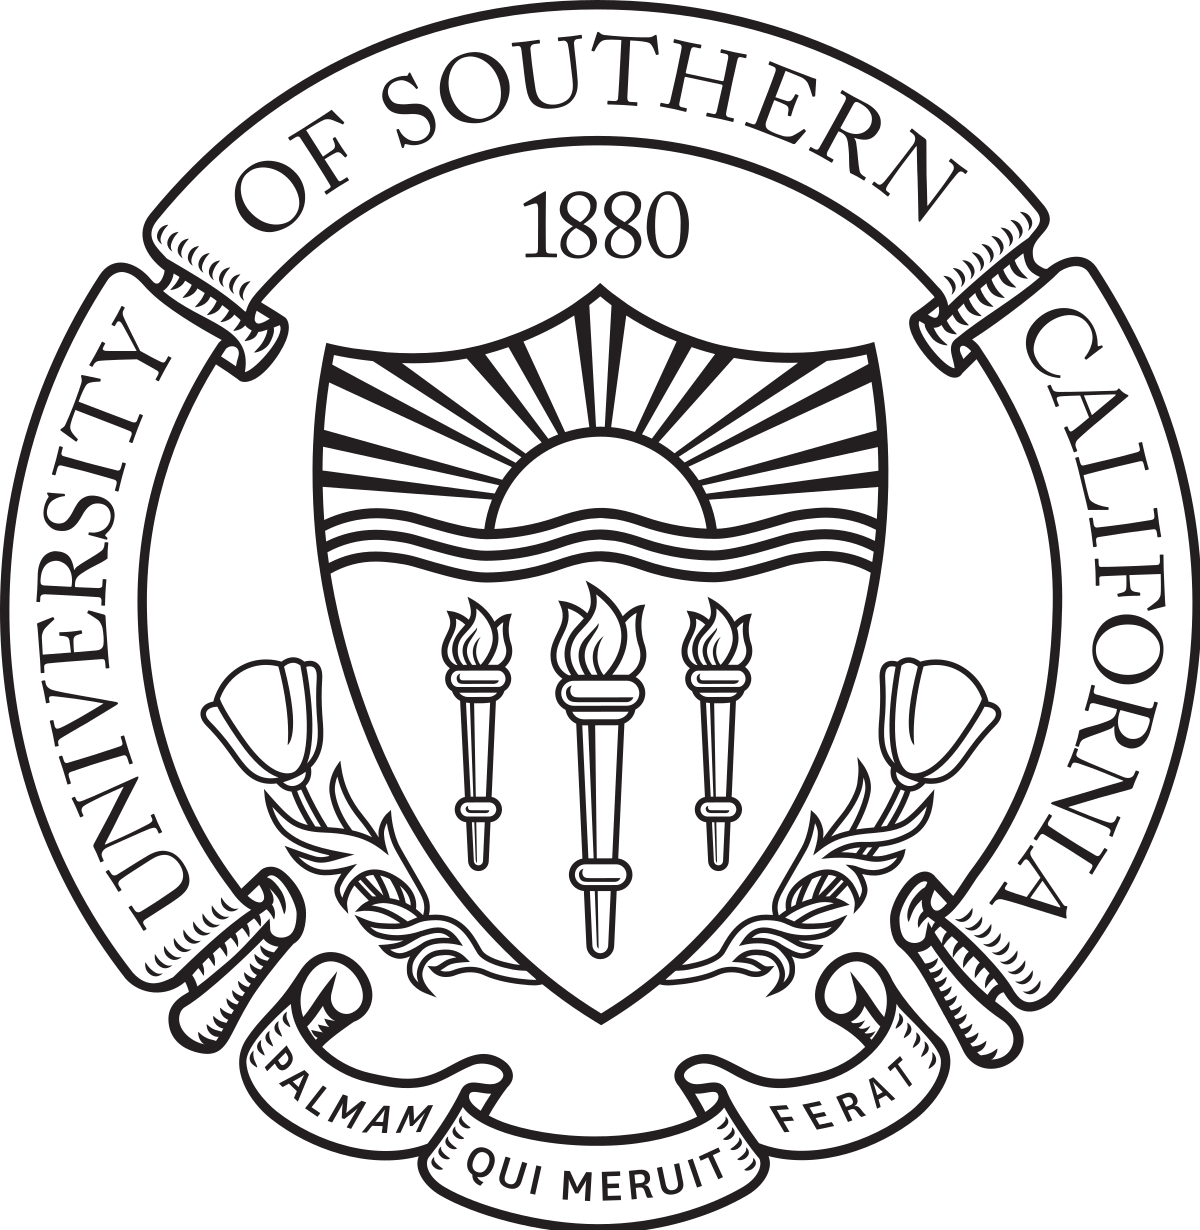 Black and White USC Logo - University of Southern California